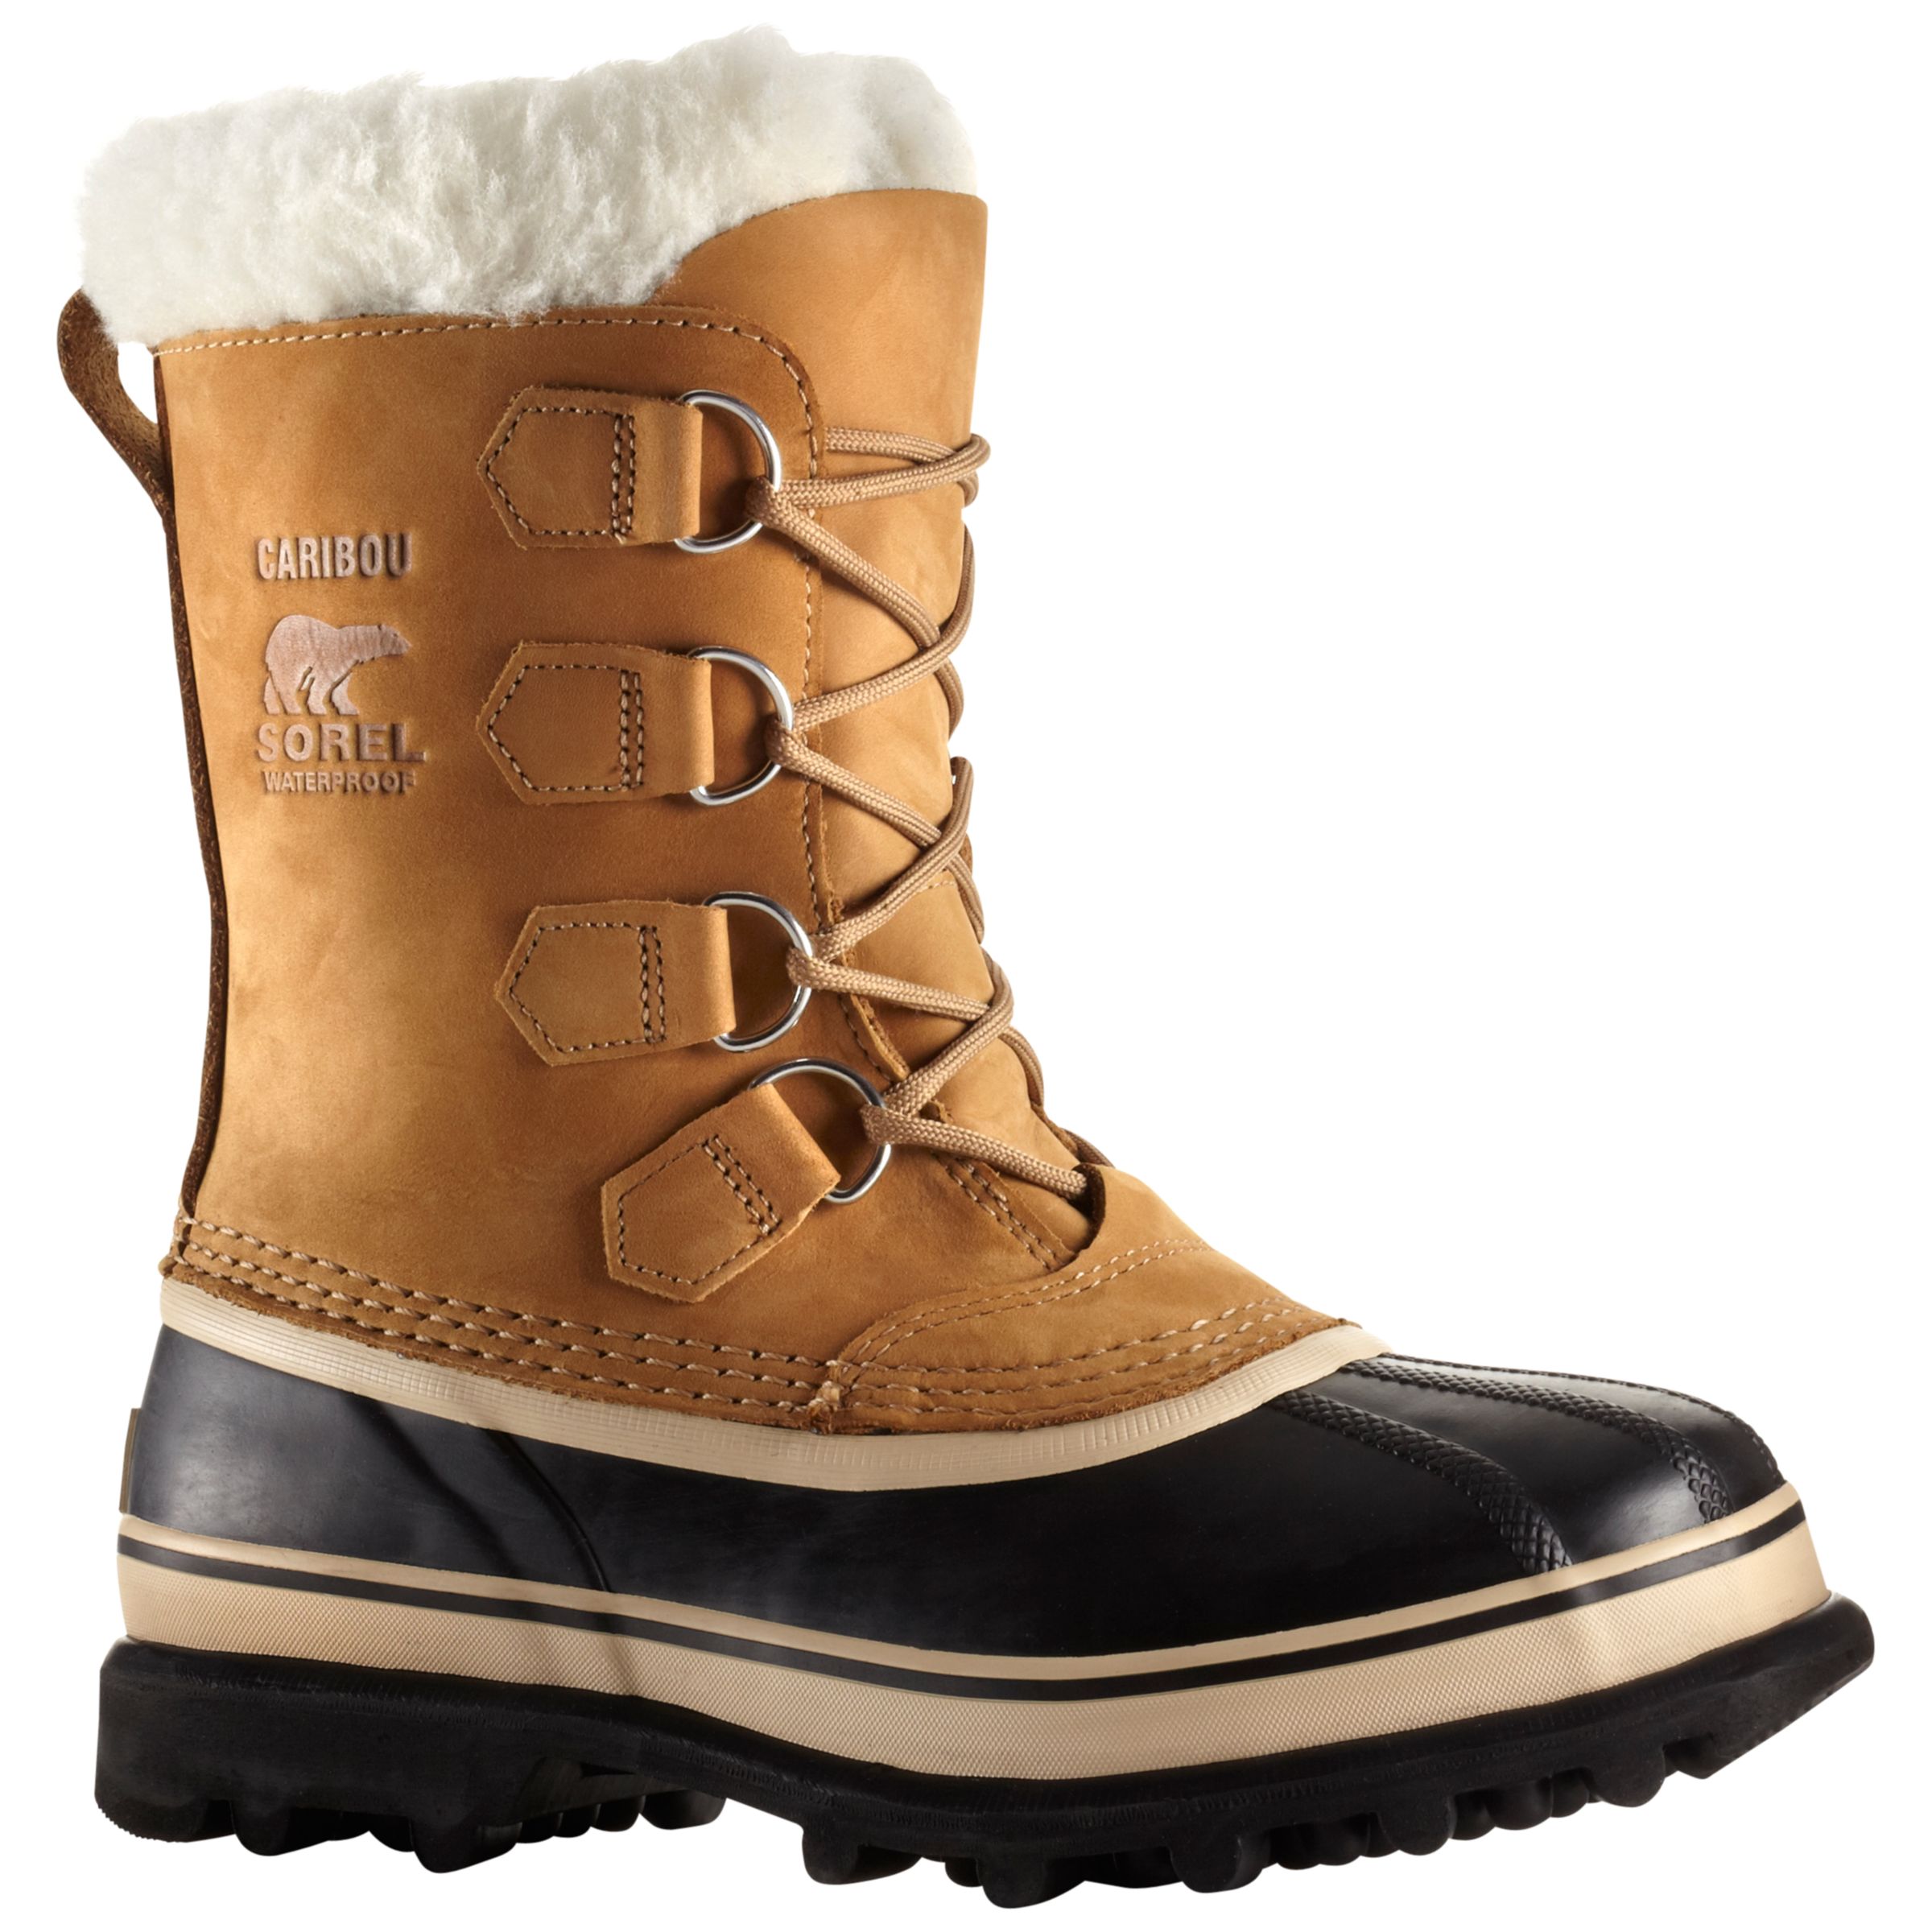 Sorel Caribou Women's Winter Snow Boots, Brown